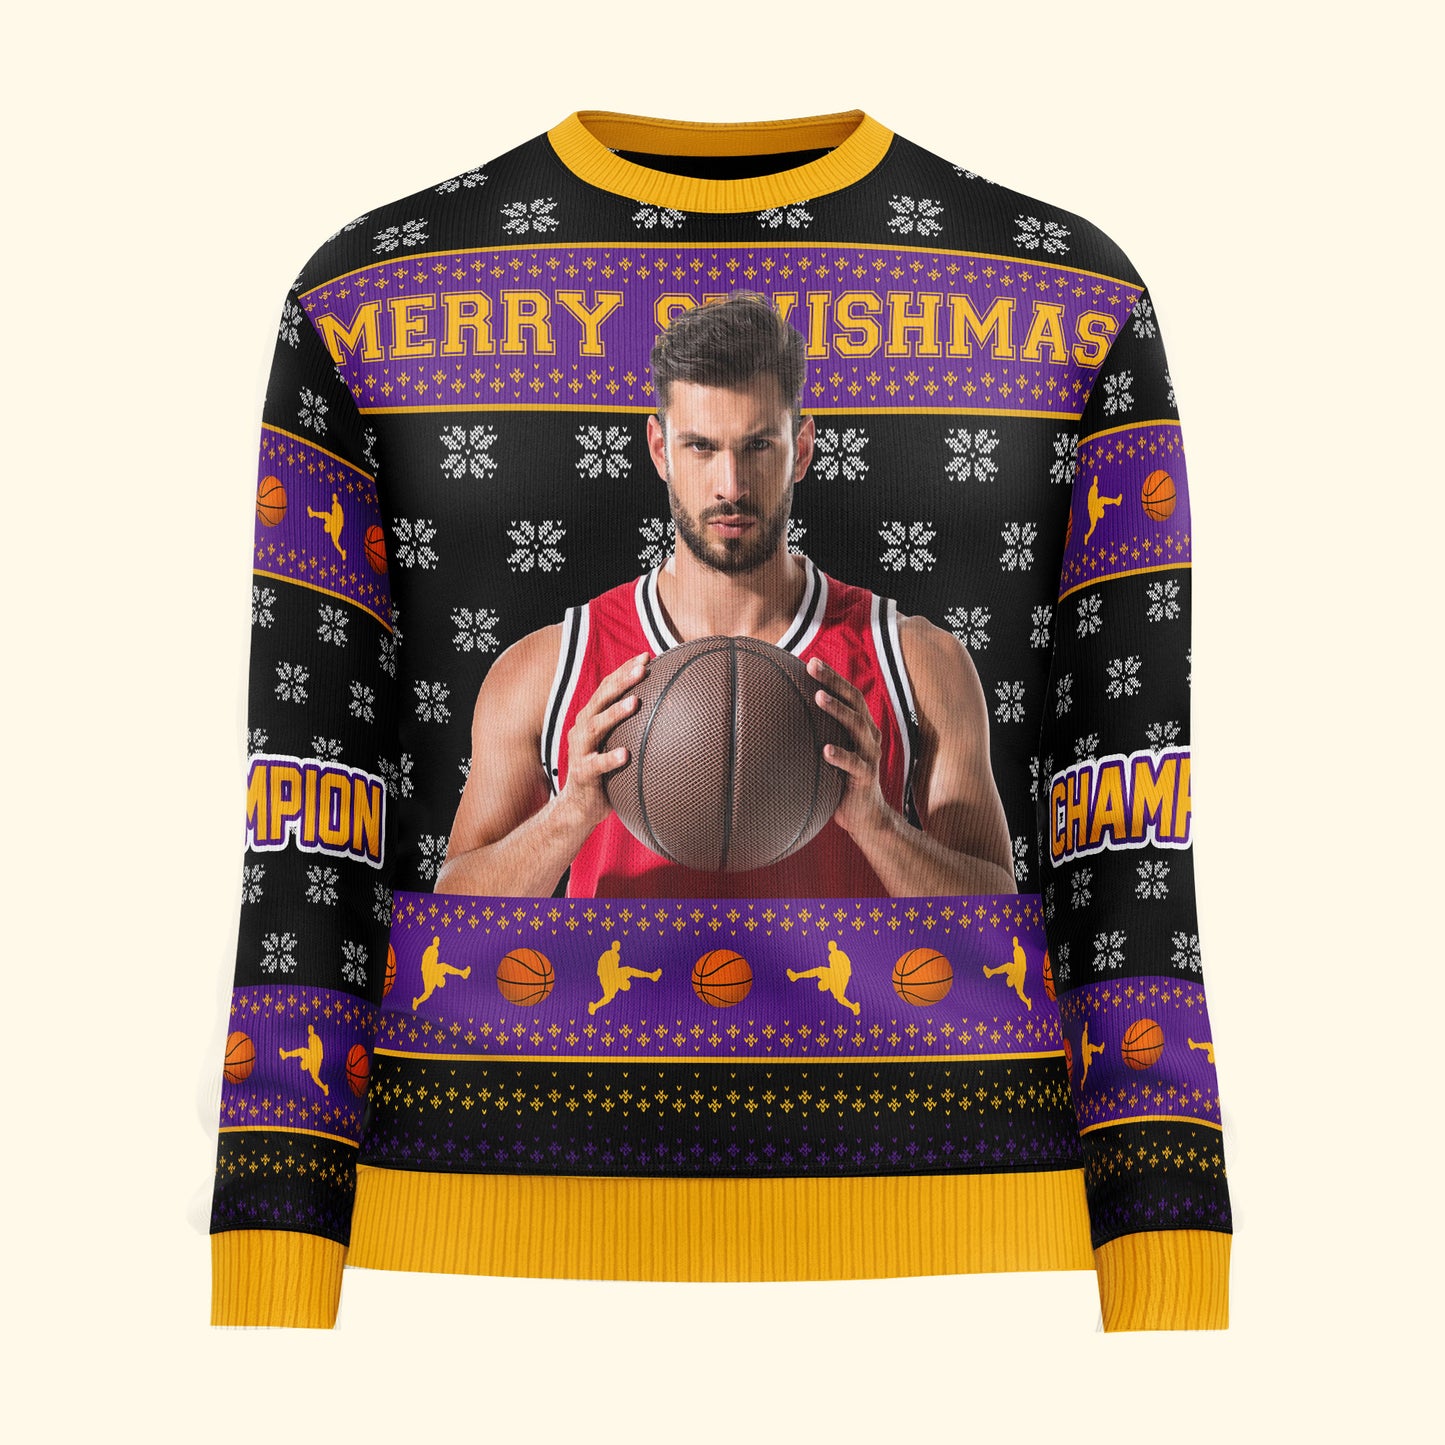 Merry Swishmas - Personalized Photo Ugly Sweater